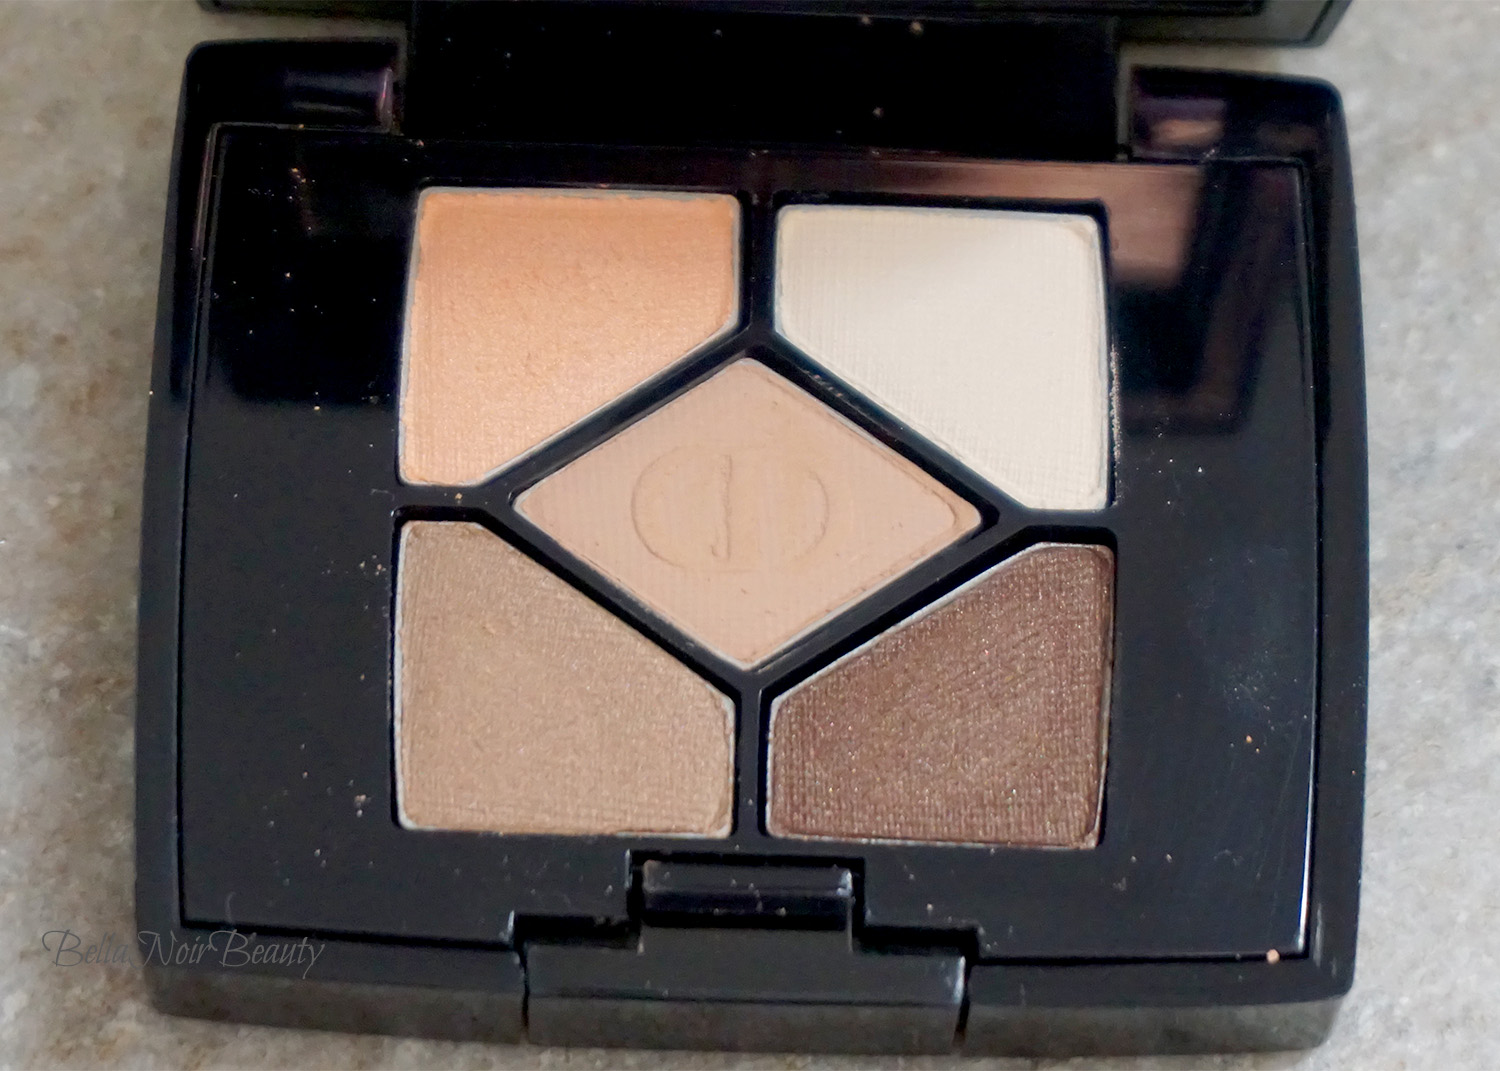 Diorshow Pump N' Volume Mascara and Eyeshadow Set | bellanoirbeauty.com